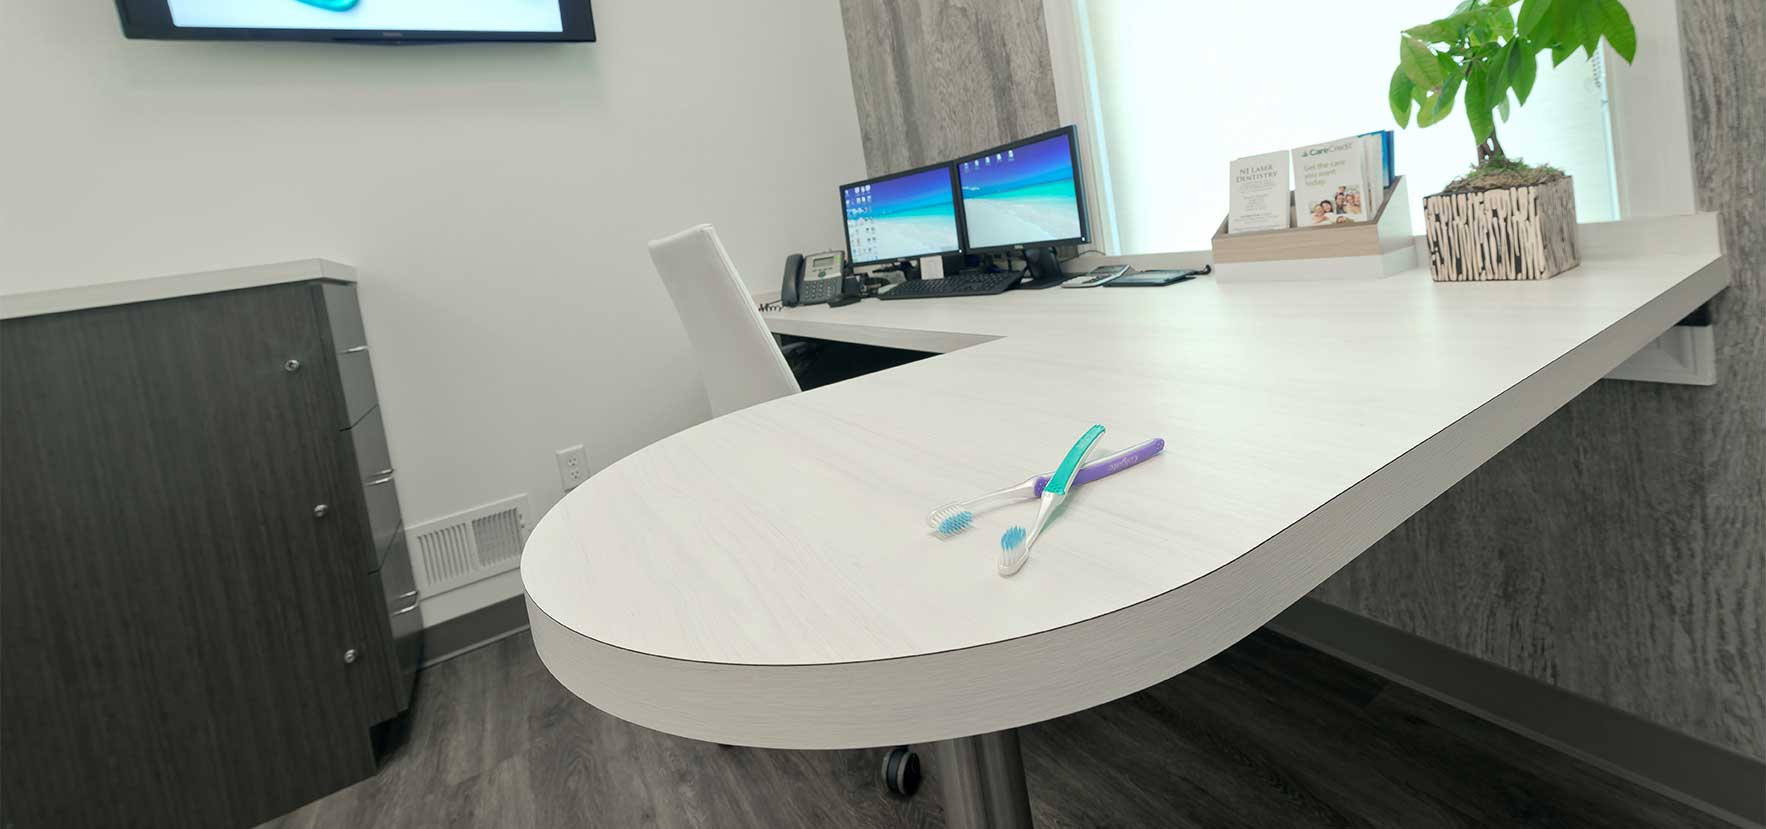 NJ Laser Dentistry | Consultation Room | Desk Worktop